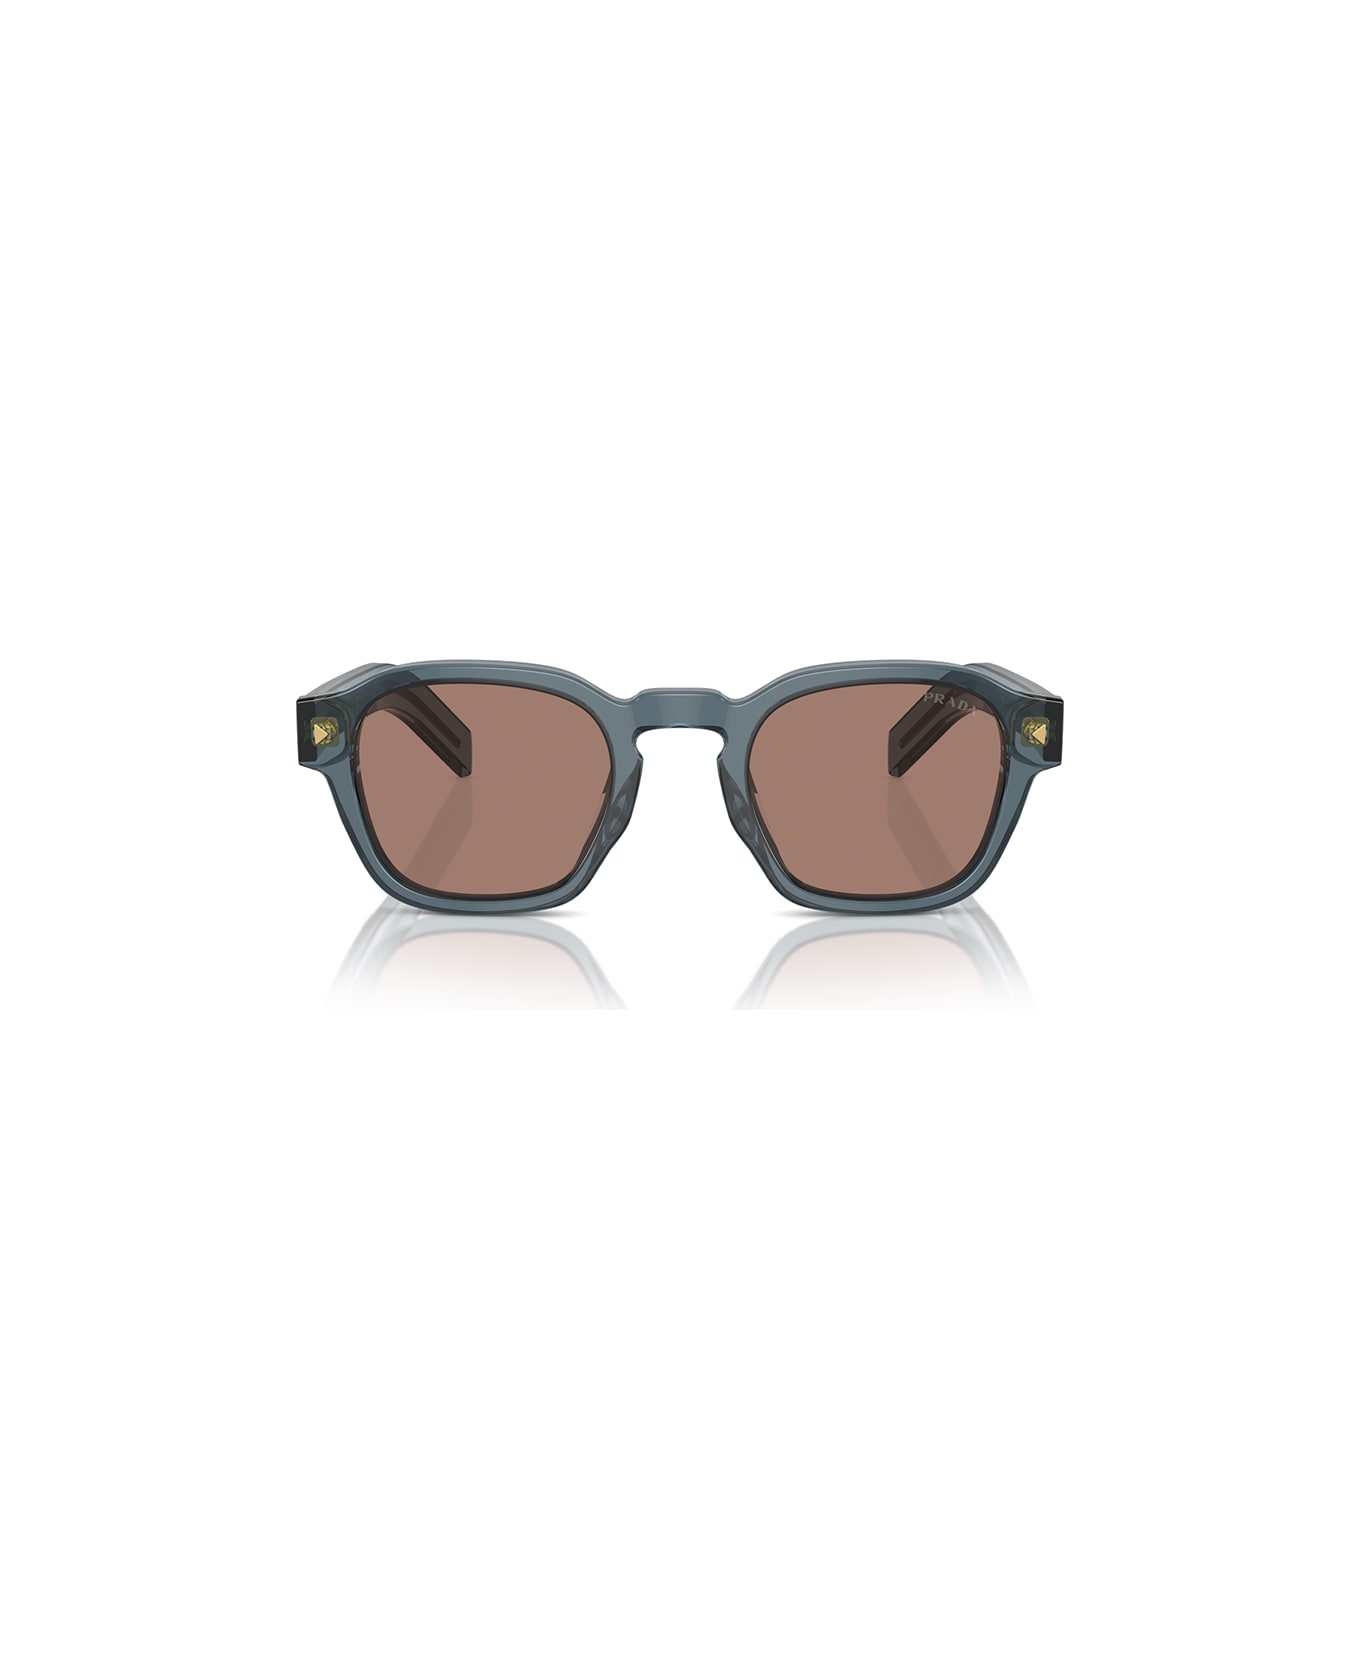 Prada Eyewear Sunglasses - Blu/Marrone